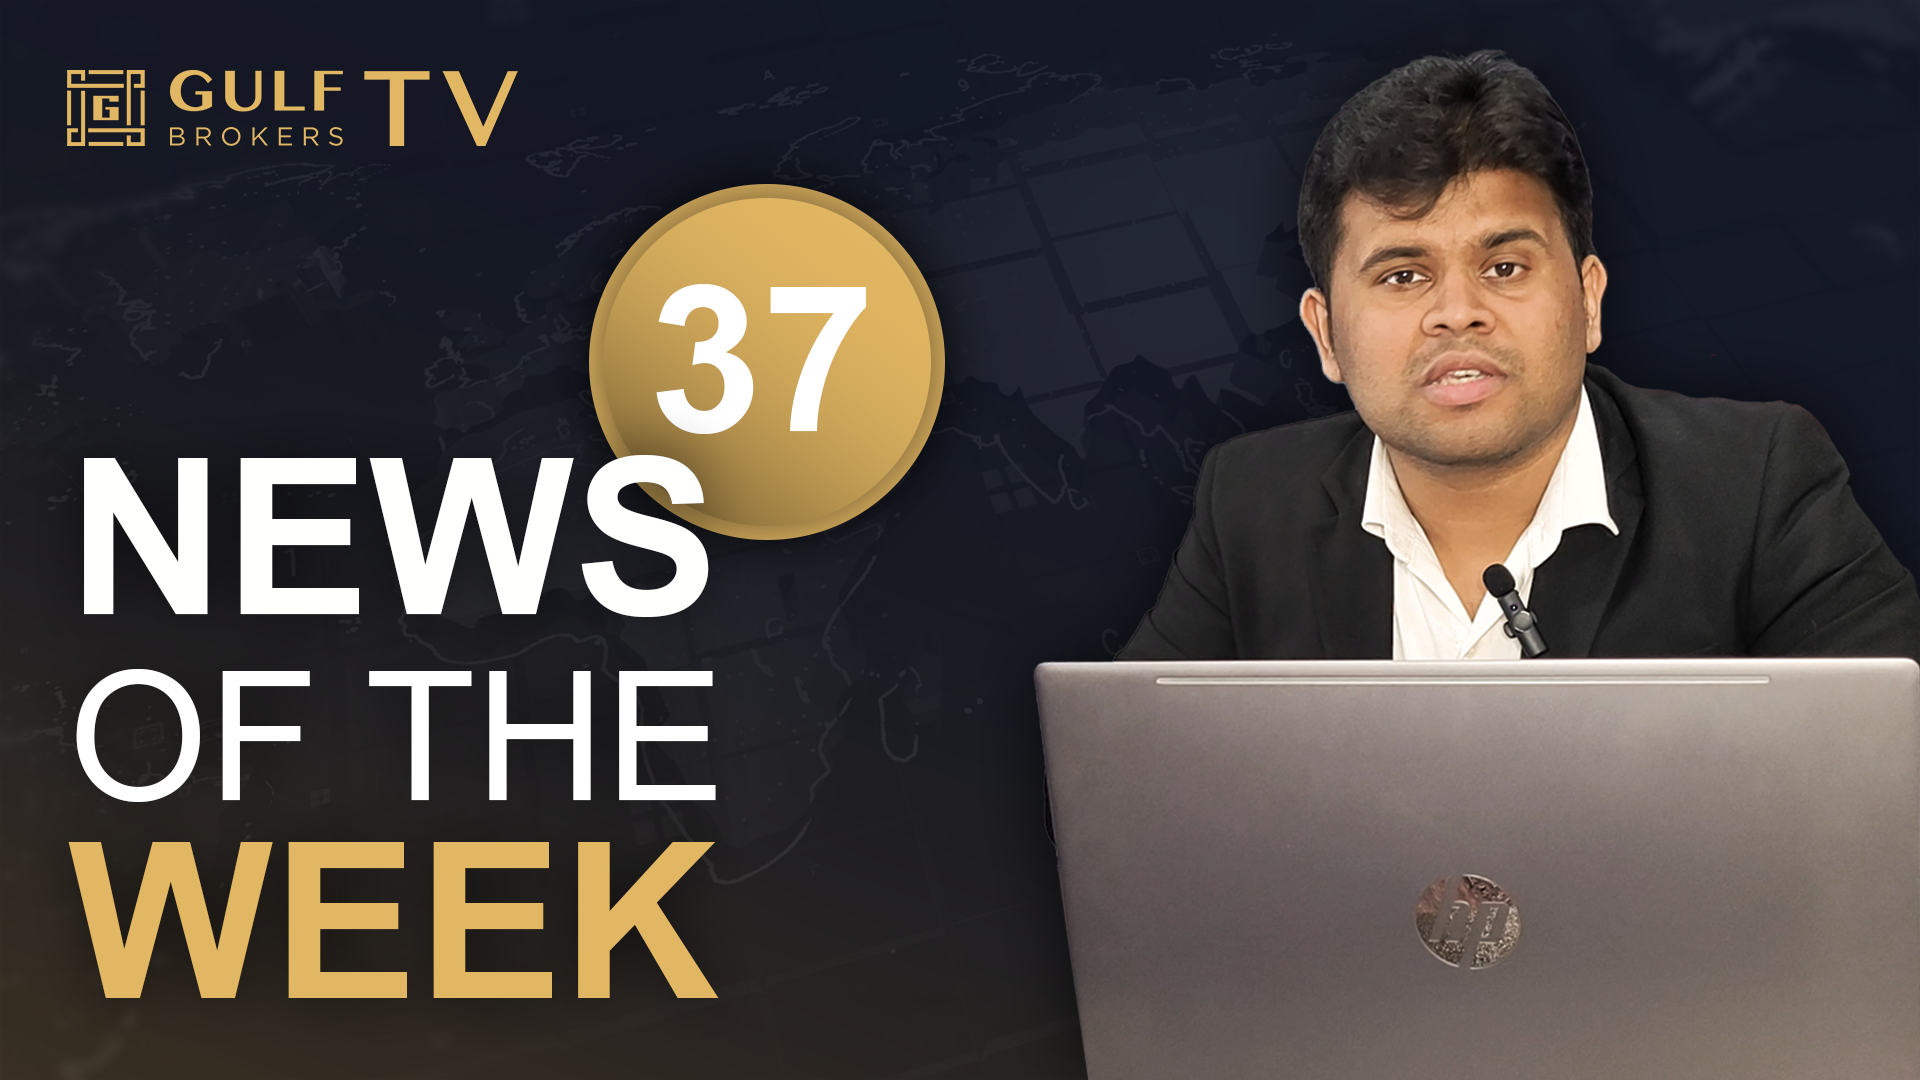 Gulfbrokers | Gulf Brokers | News of the week 37 | Syam KP